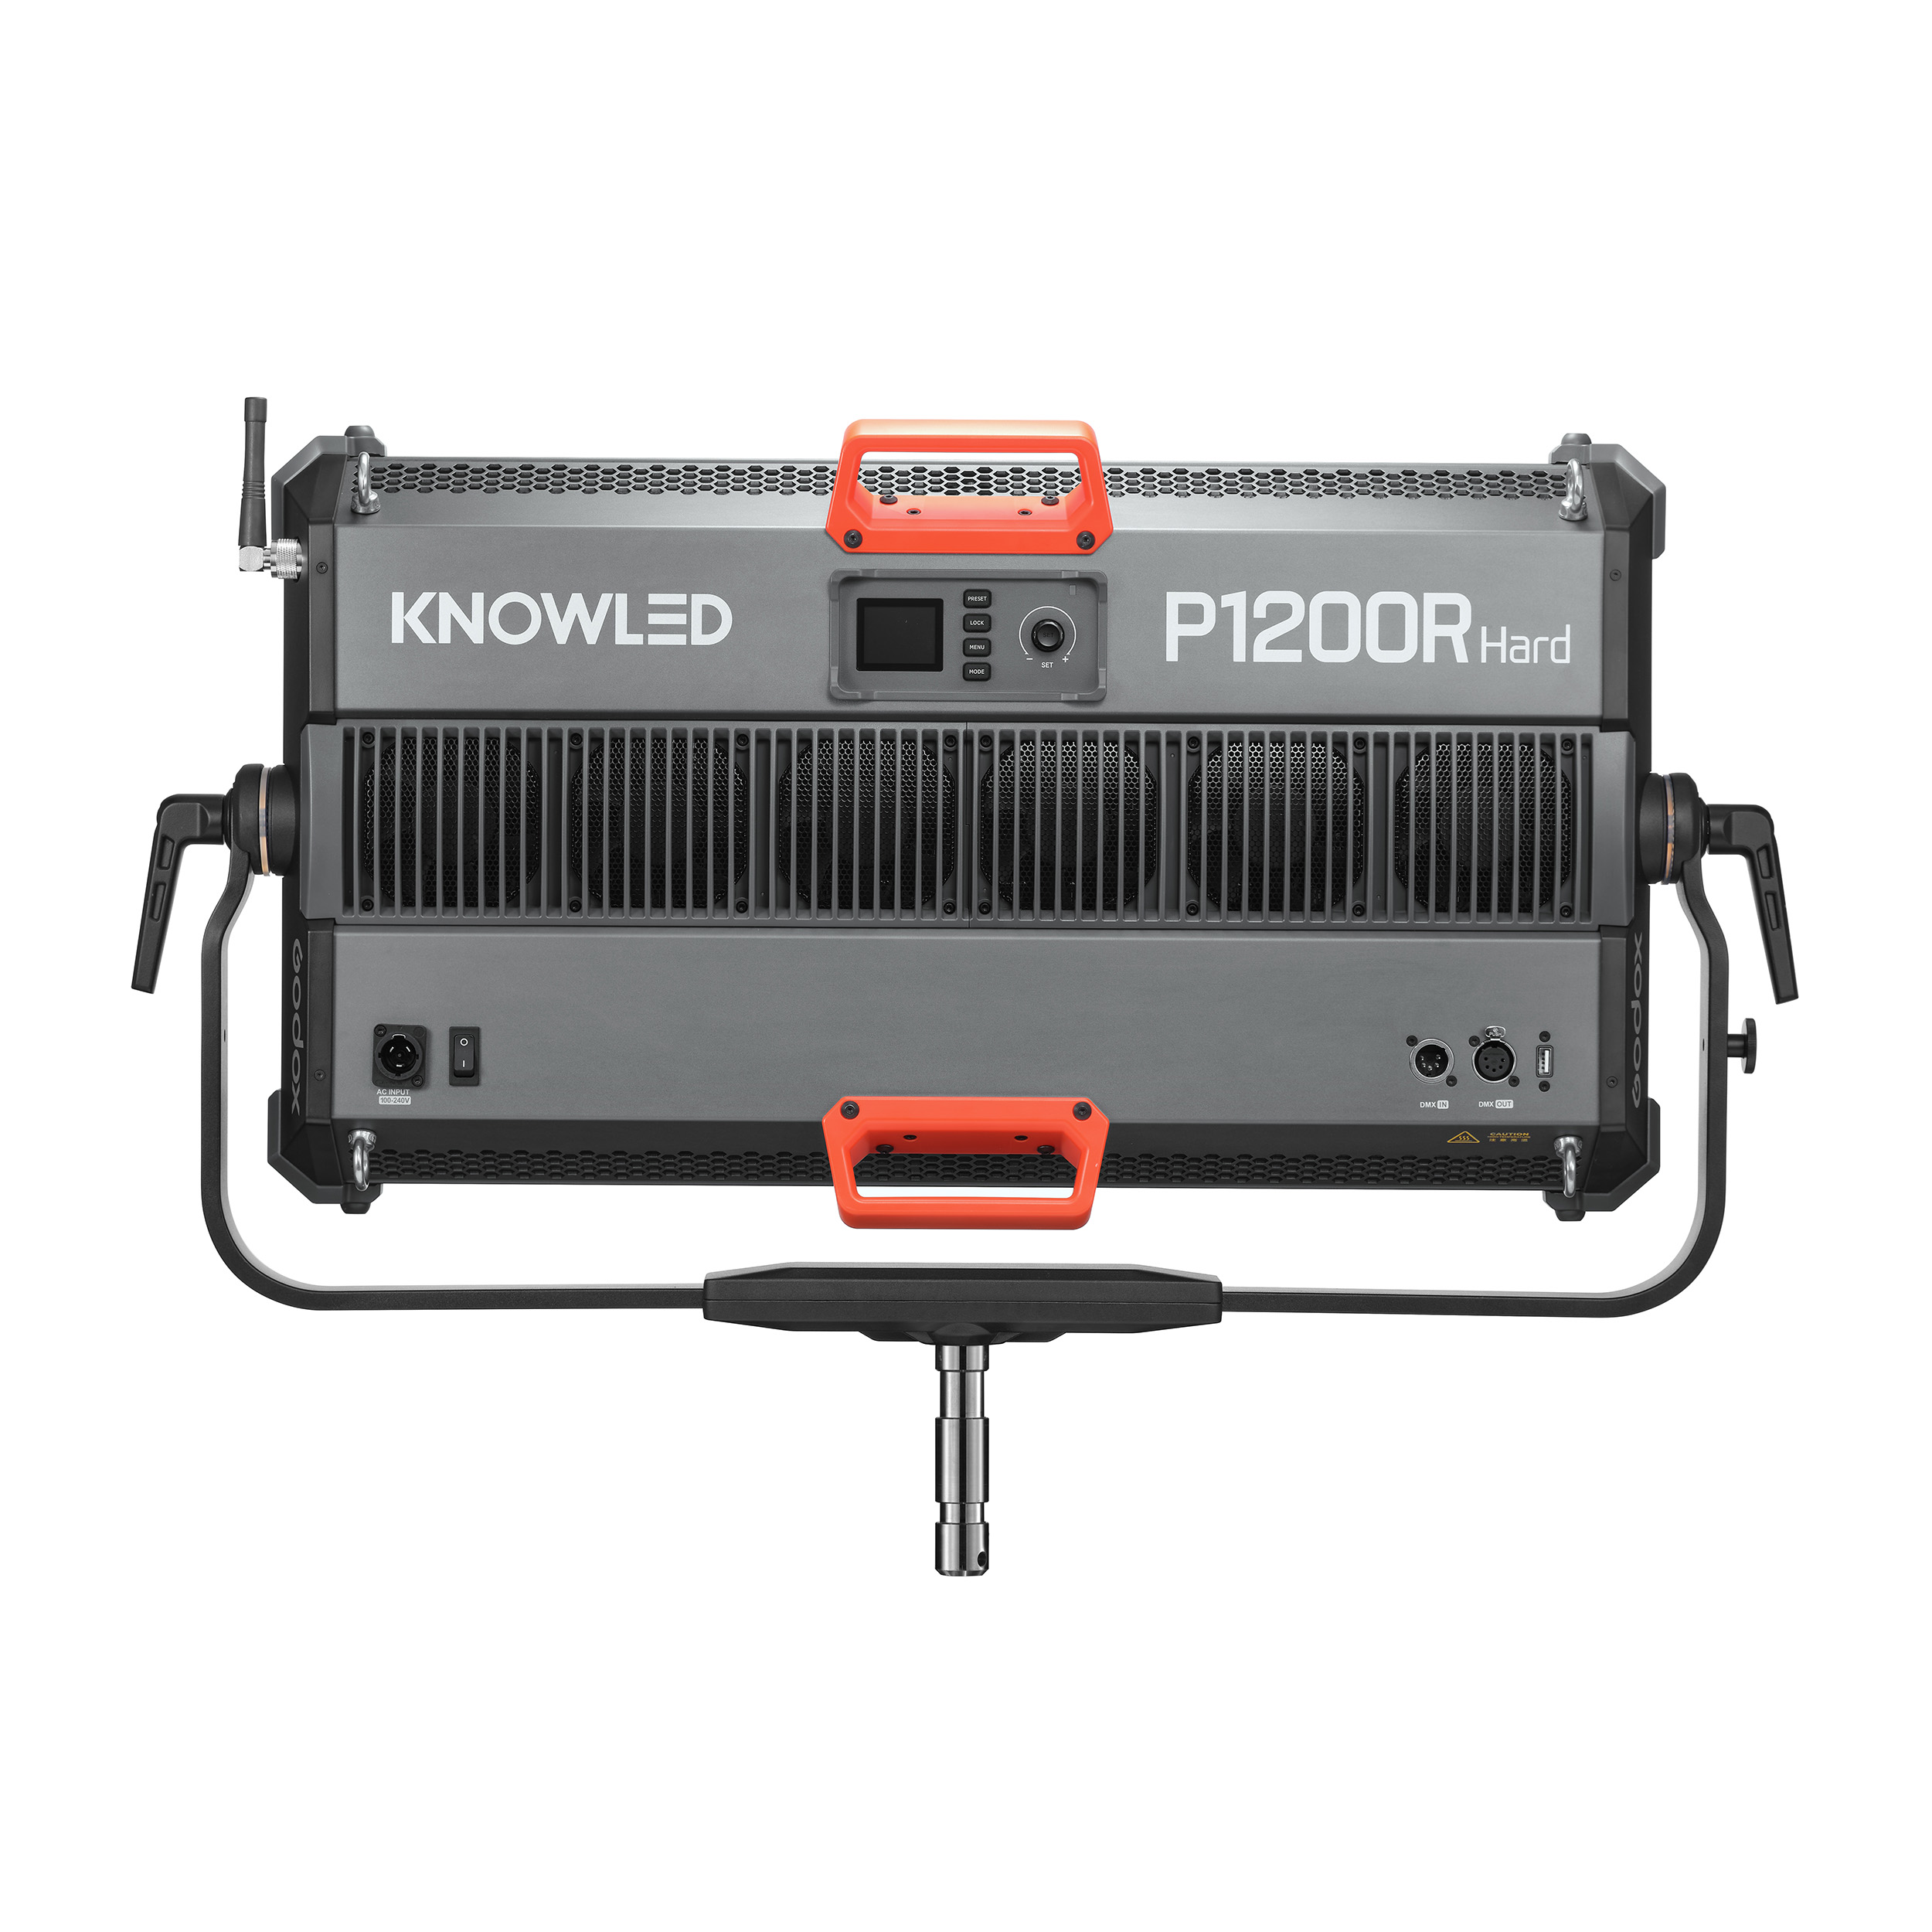    Godox Knowled P1200R Hard   Ultra-mart